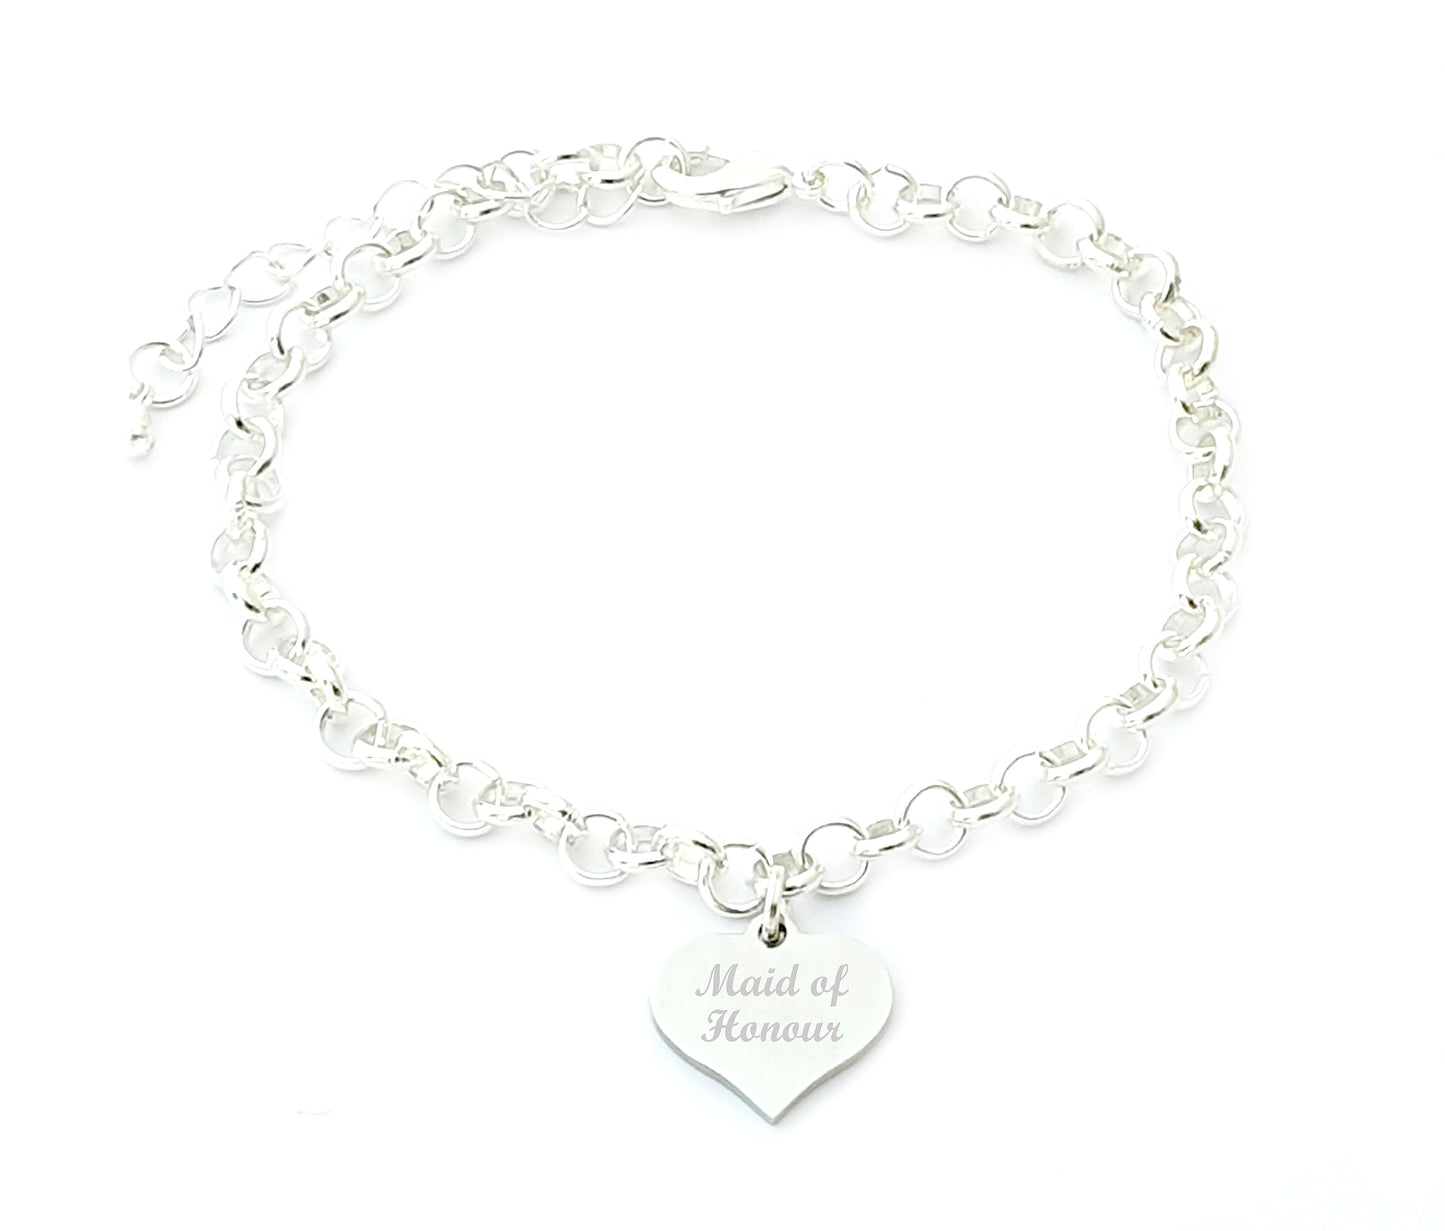 Maid of Honour Engraved Heart Link Bracelet Wedding Gift Message Jewellery